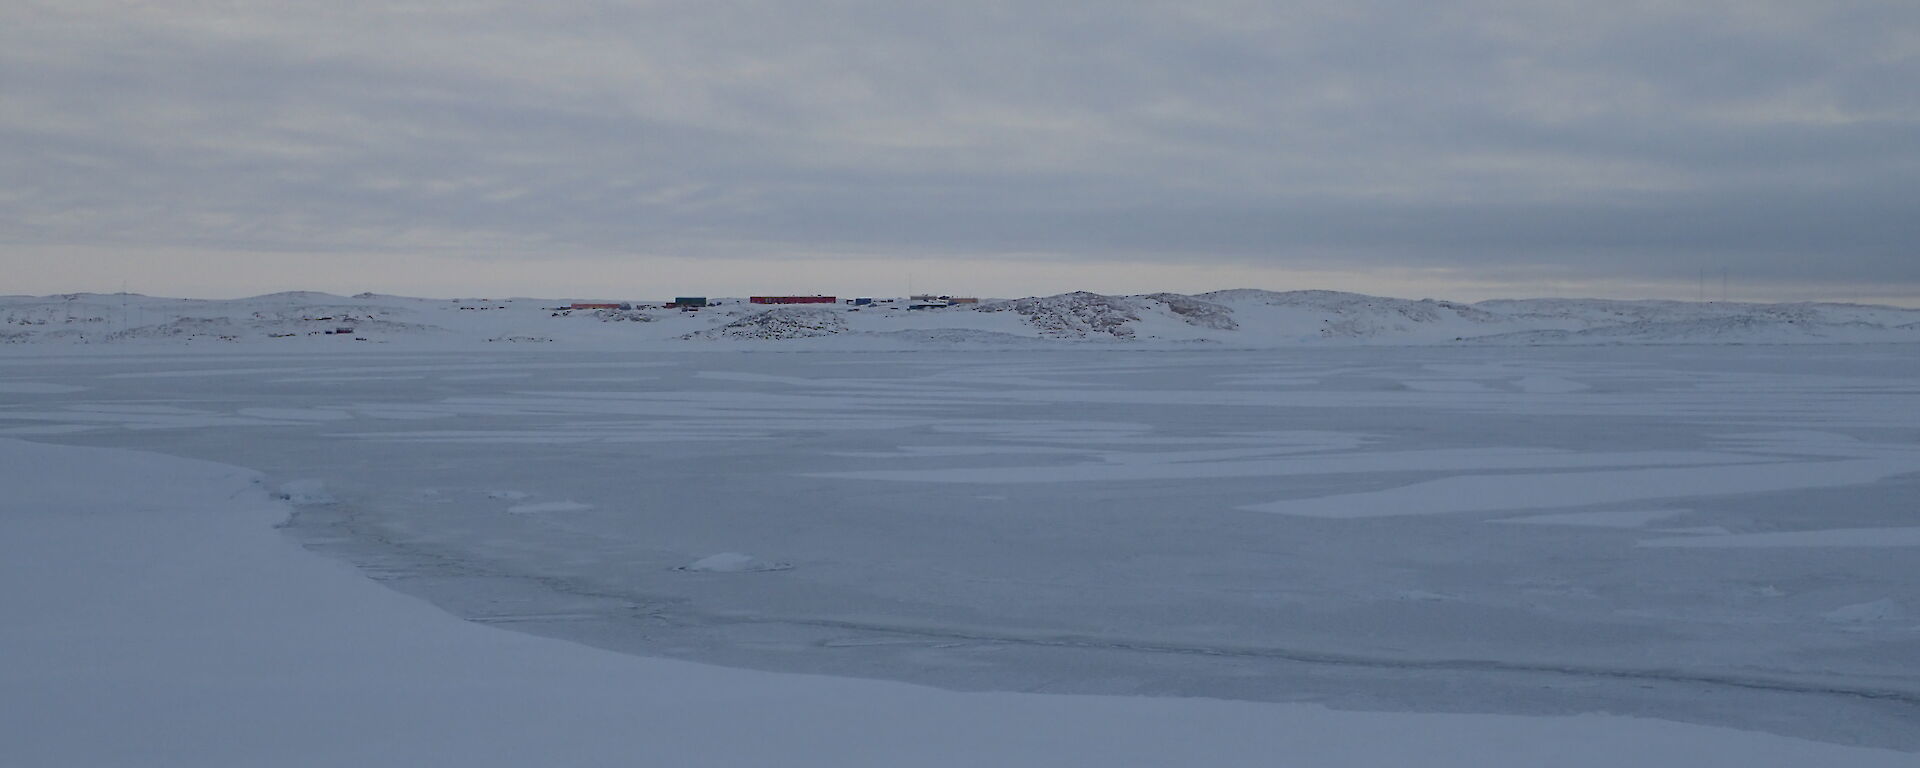 View of station across broken sea ice.